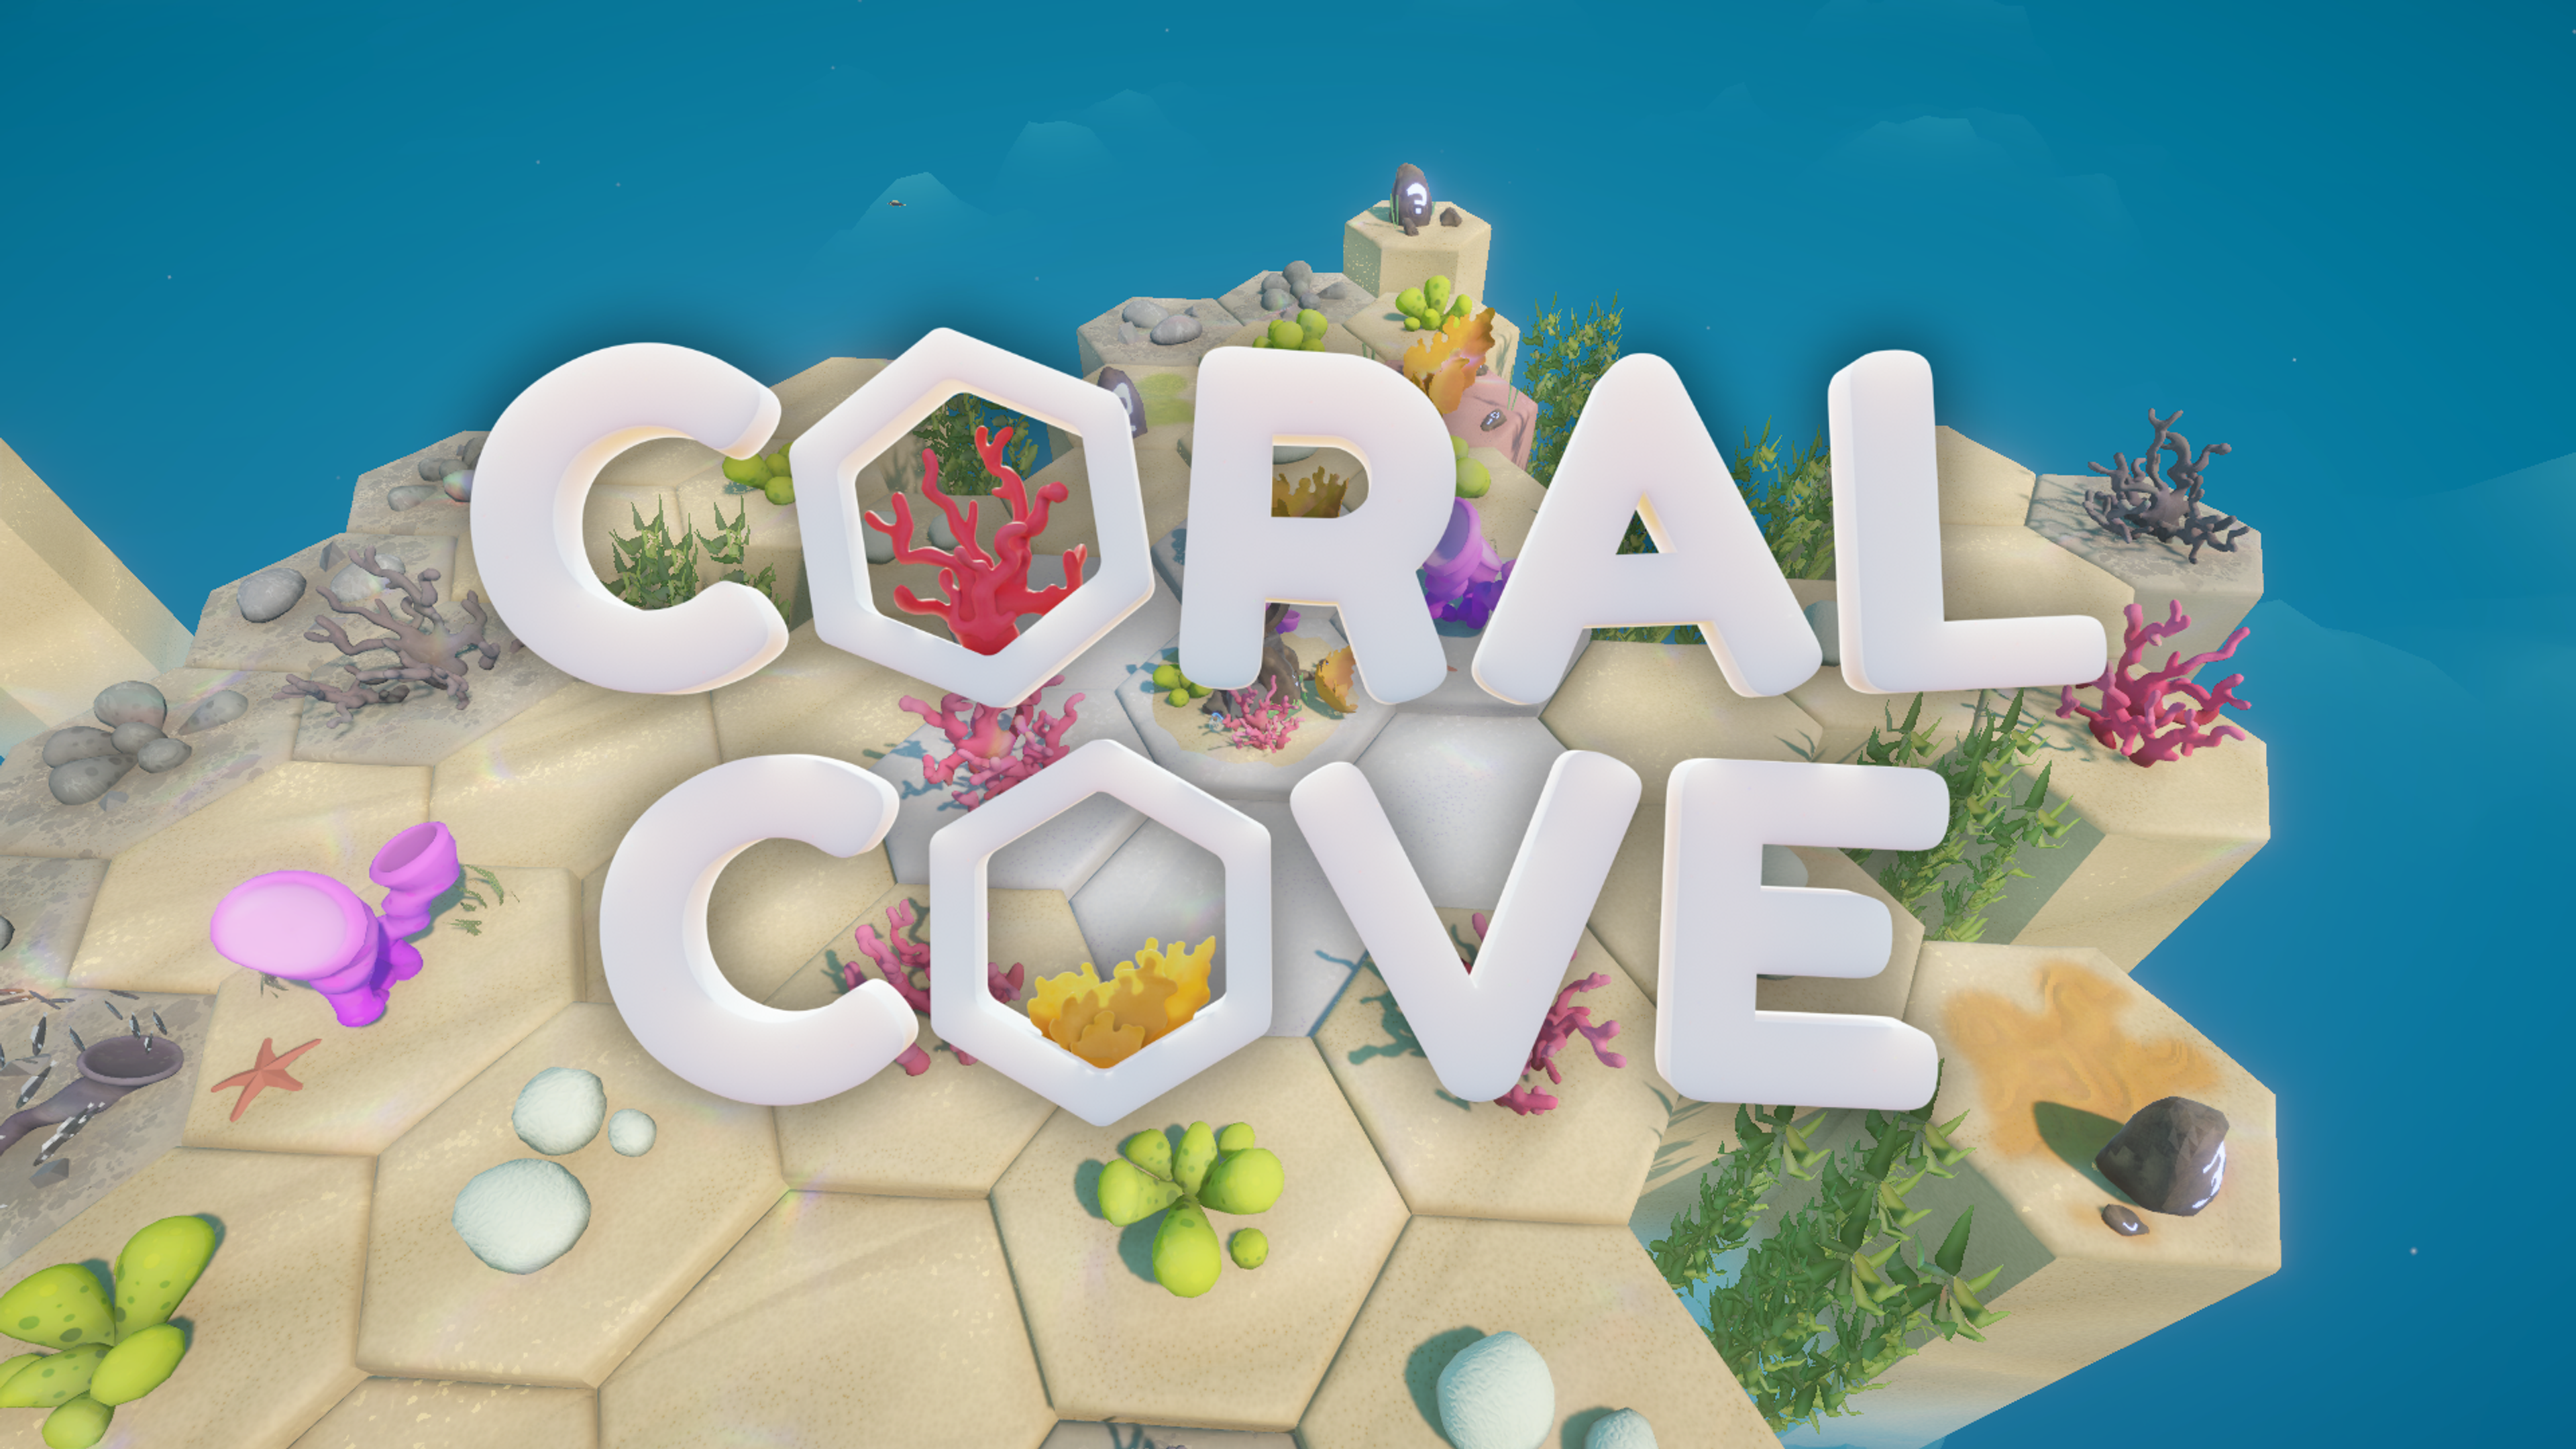 Coral Cove Image